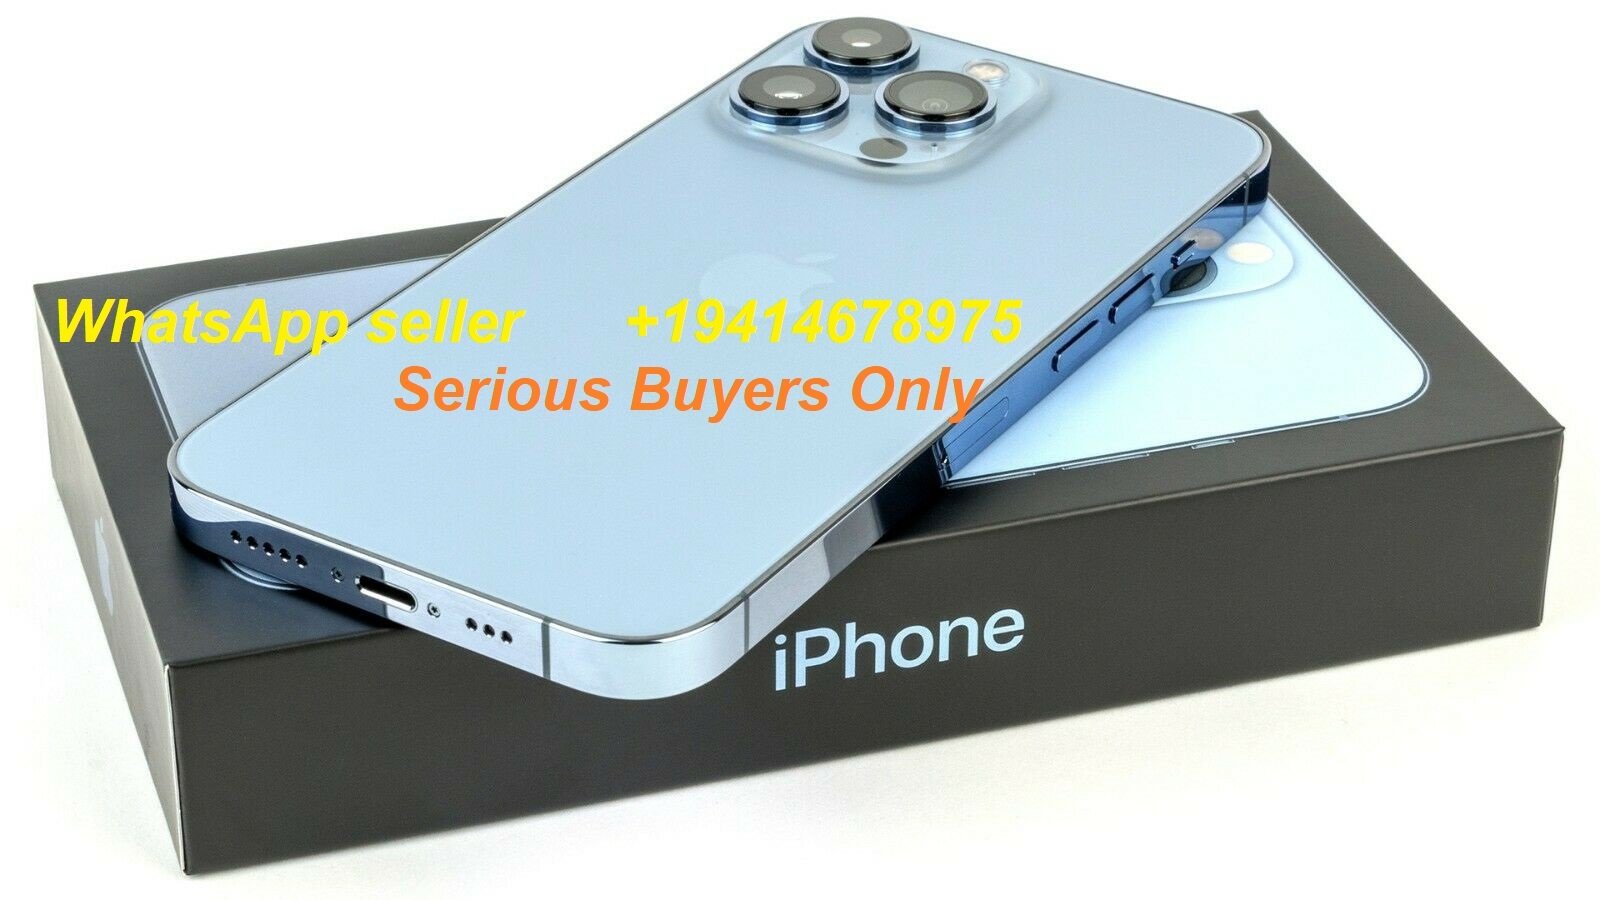 Ramadan Offer Apple iPhone 13 Pro Max 12 Pro 11 Pro Samsung Ultra 5G WhatsApp seller on  +19414678975